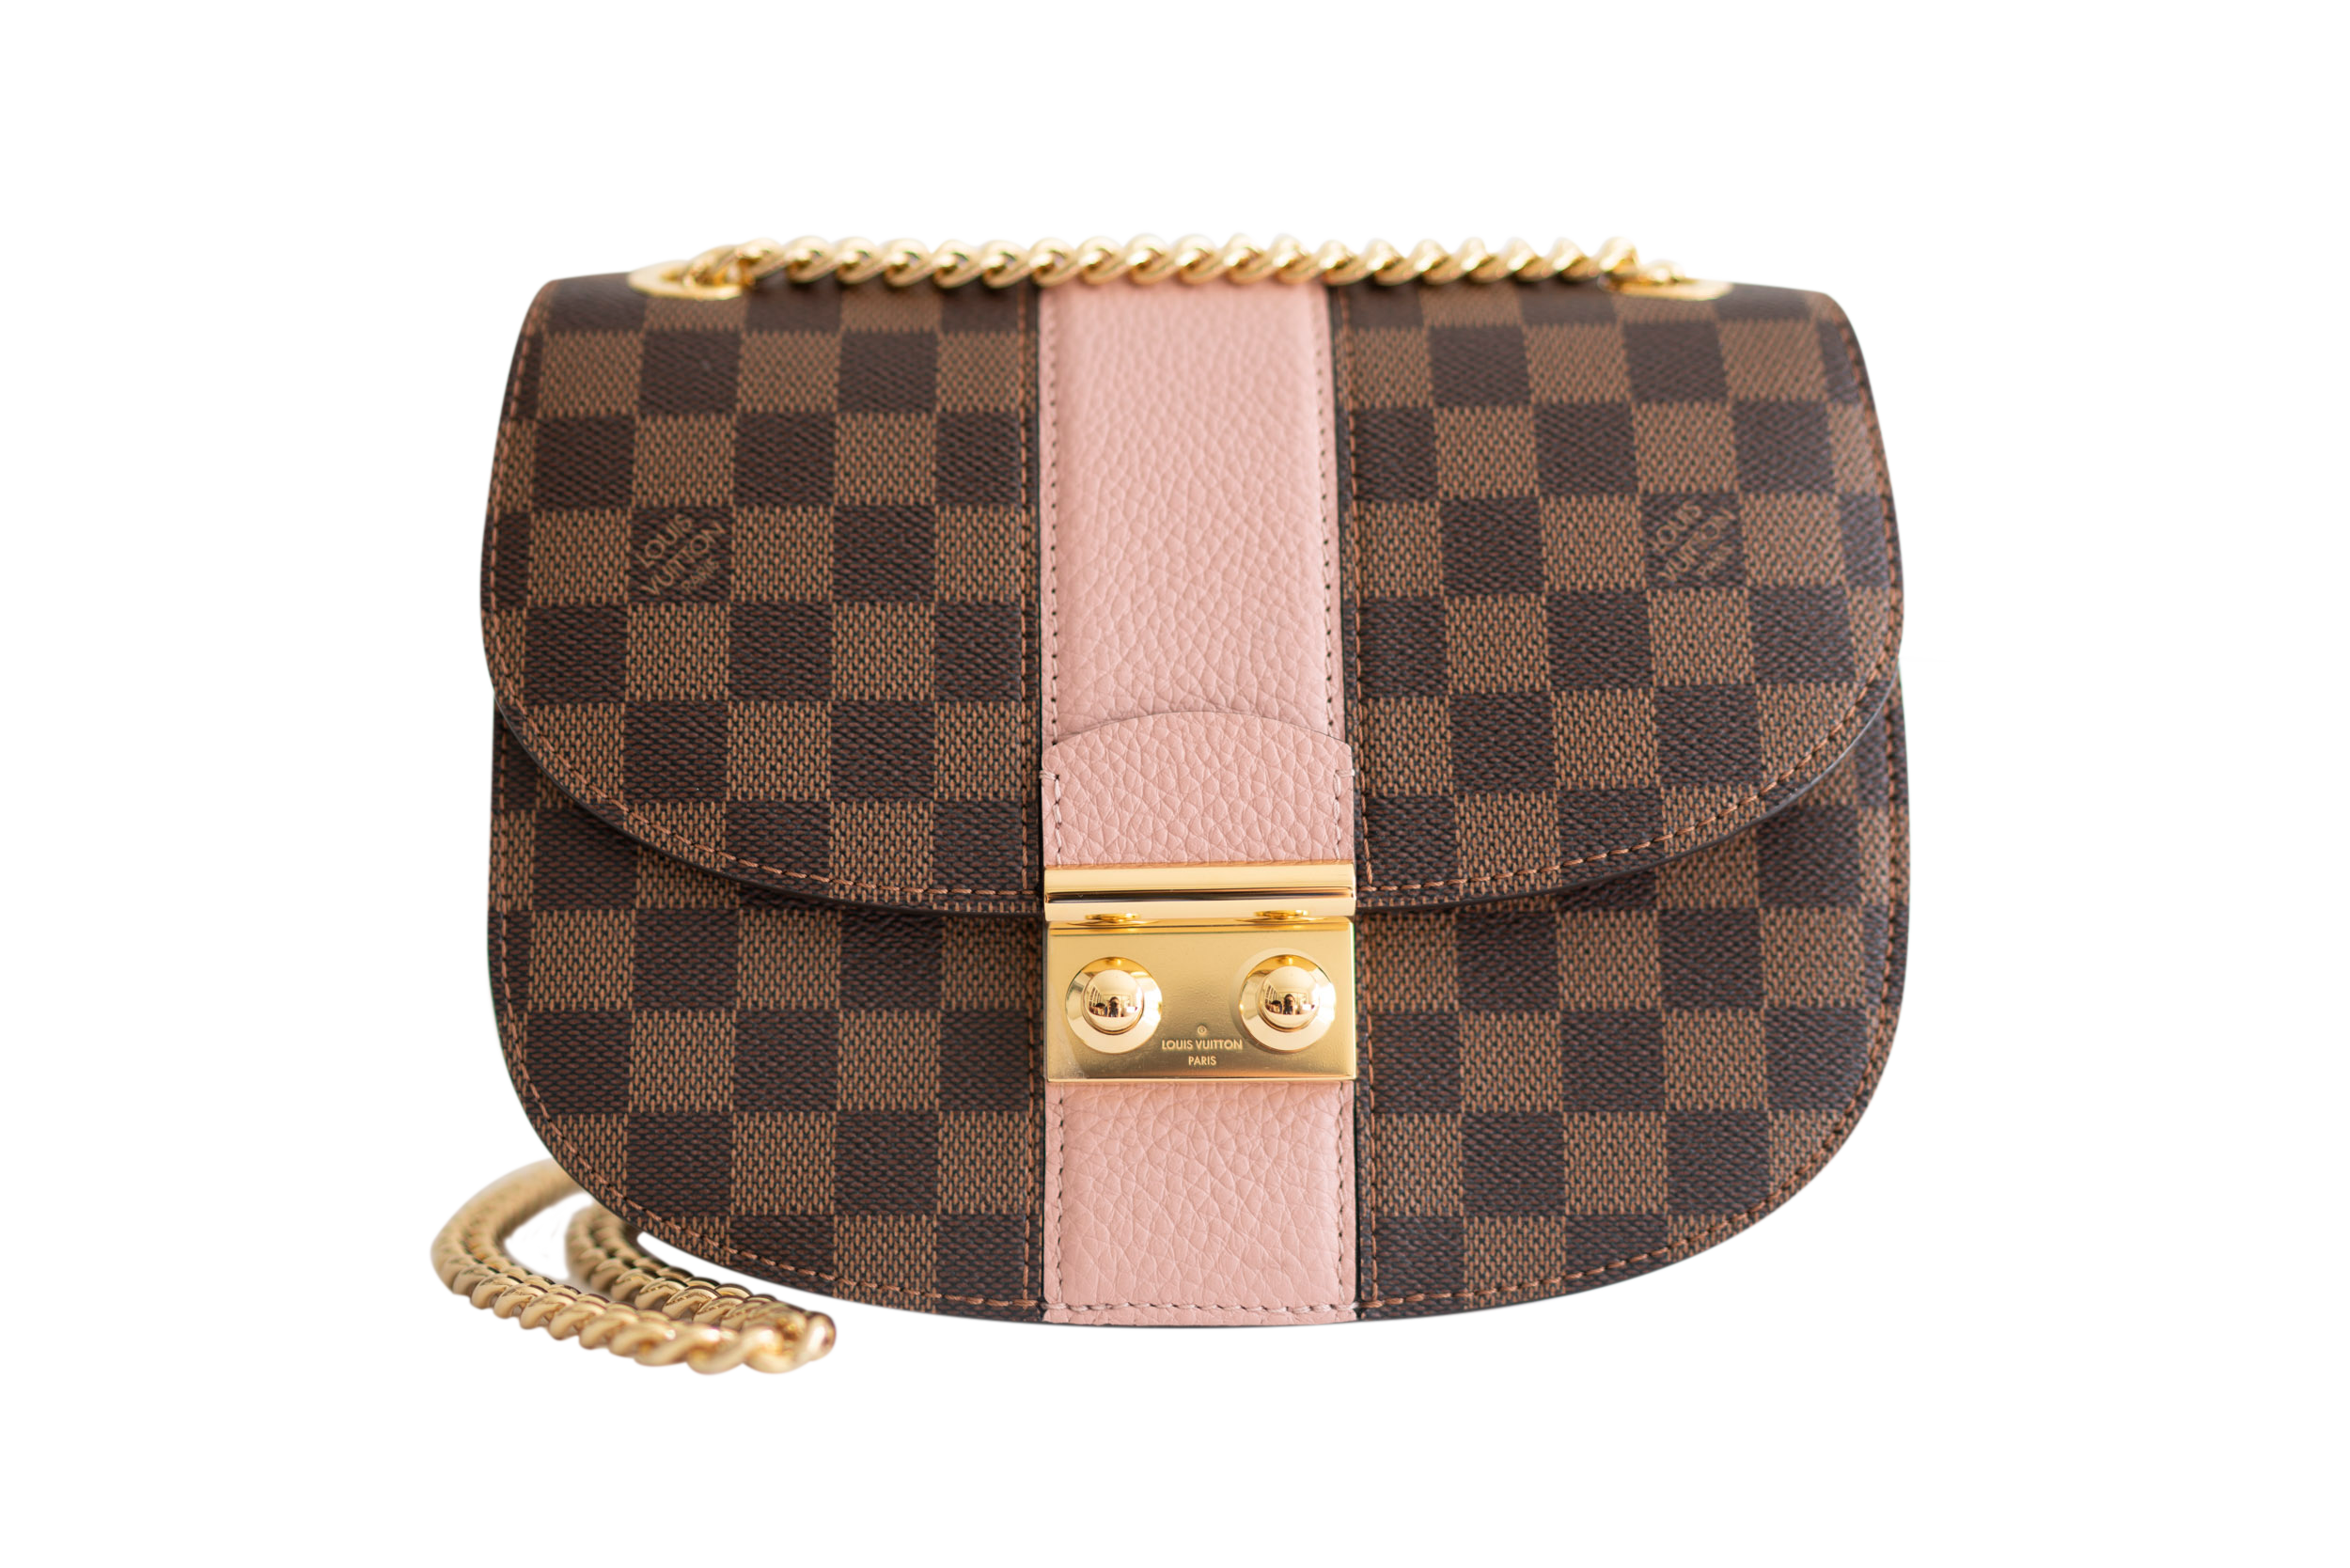 Palm Springs Backpack MM  Rent Louis Vuitton Handbags